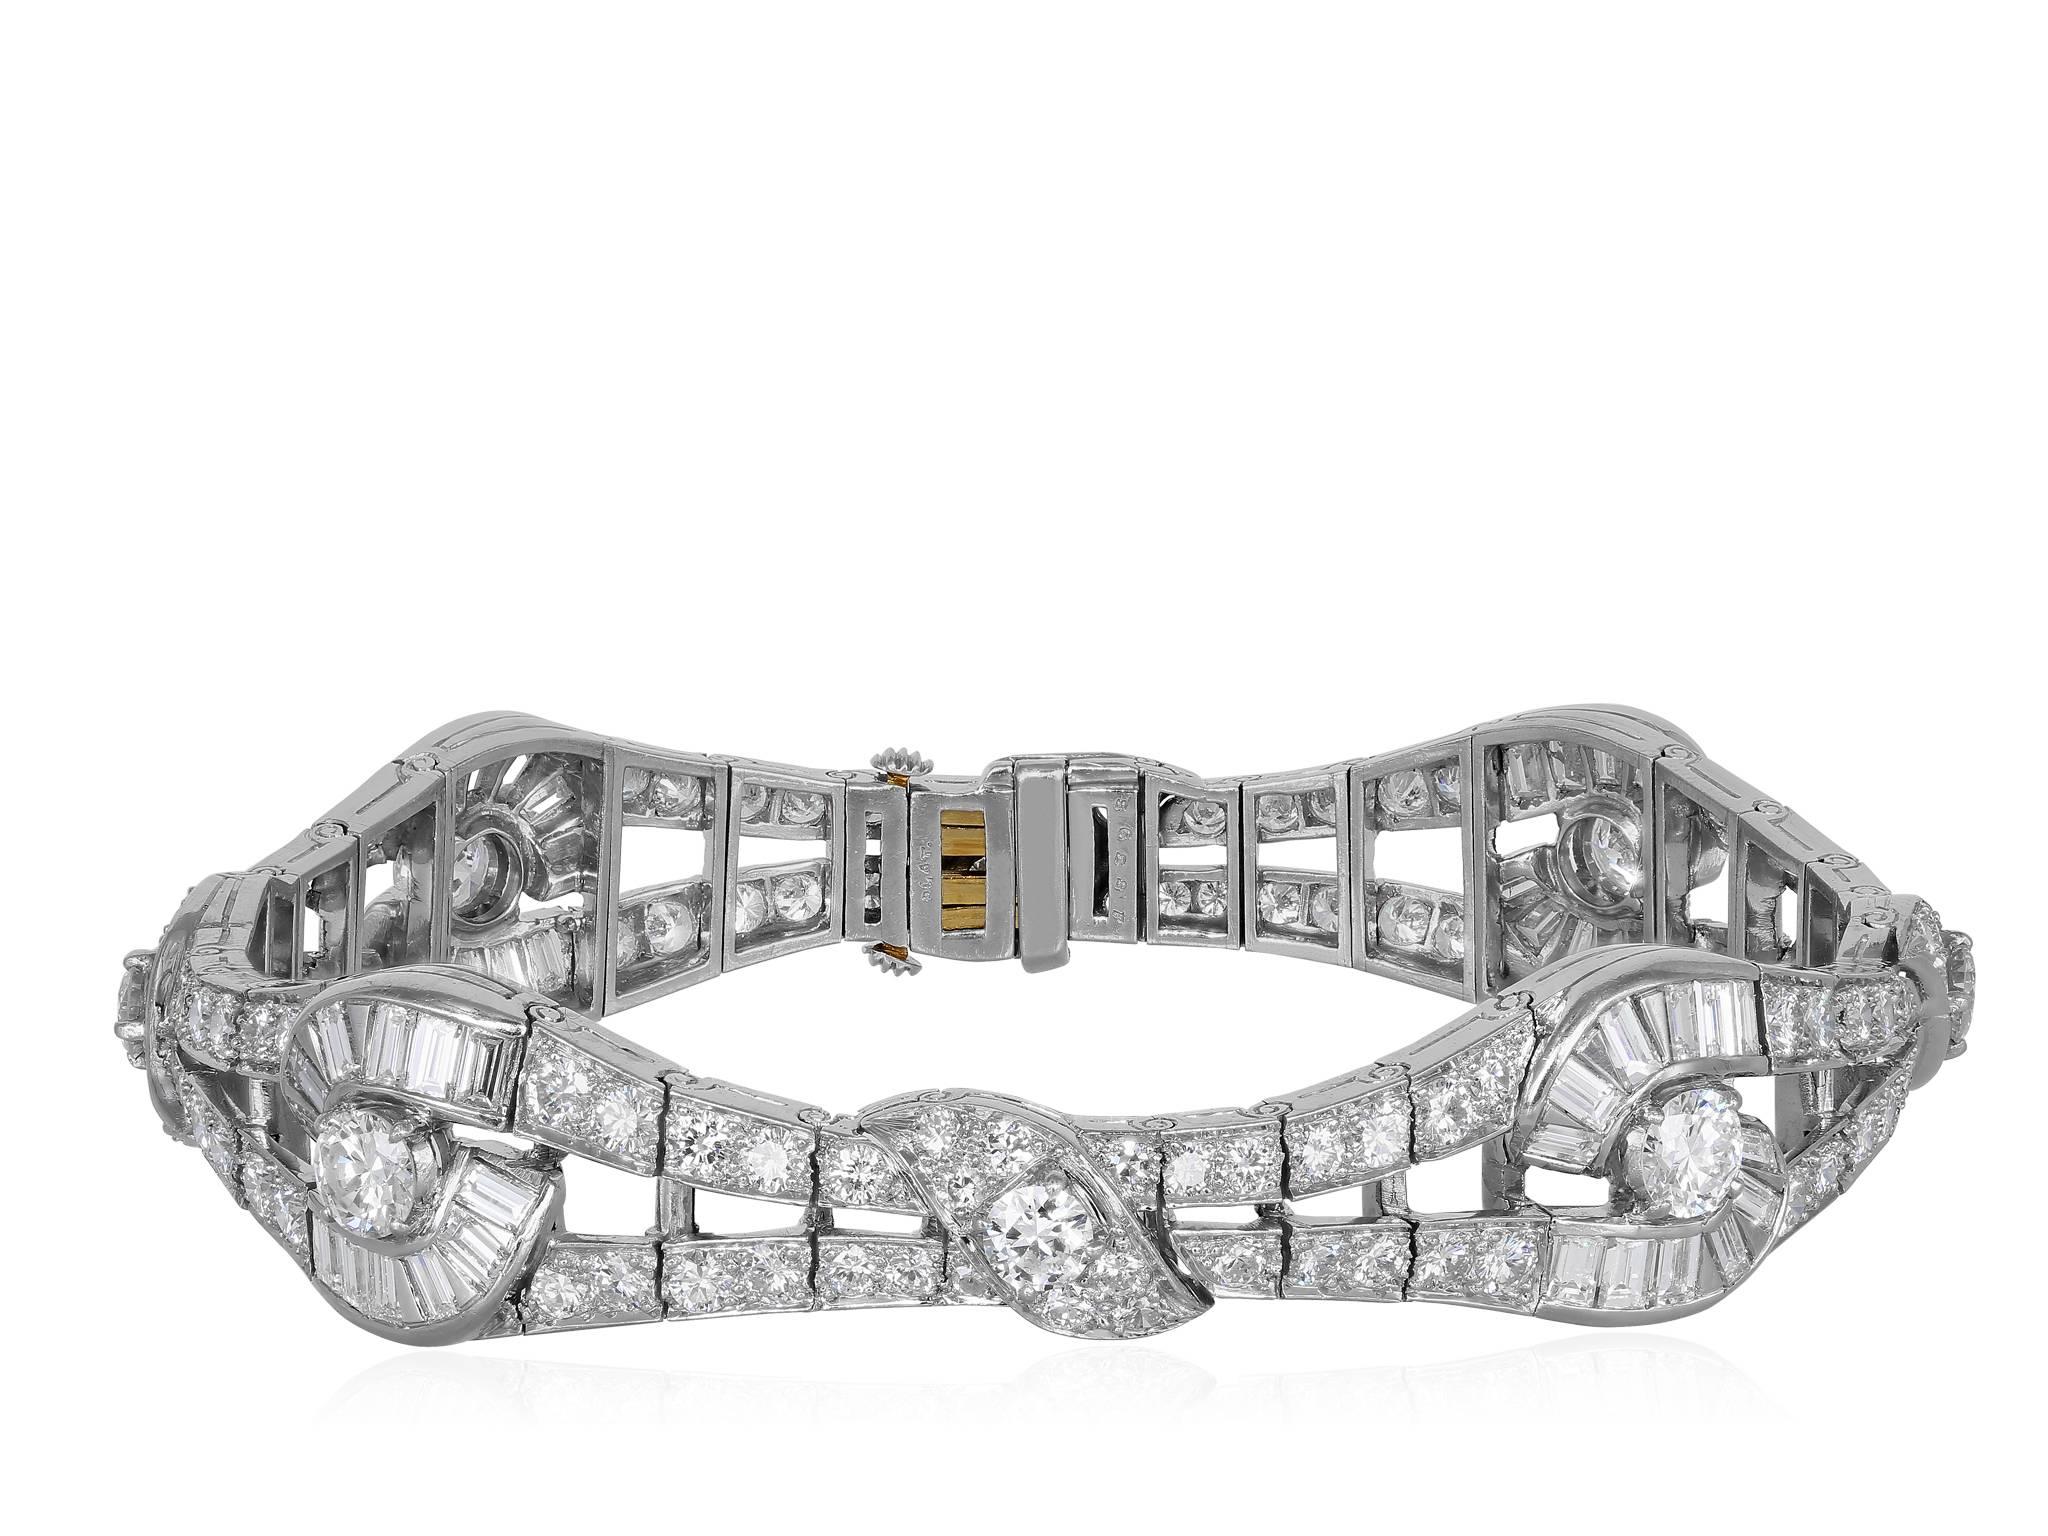 Oscar Heyman Art Deco platinum diamond bracelet with baguette and round brilliant cut diamonds.